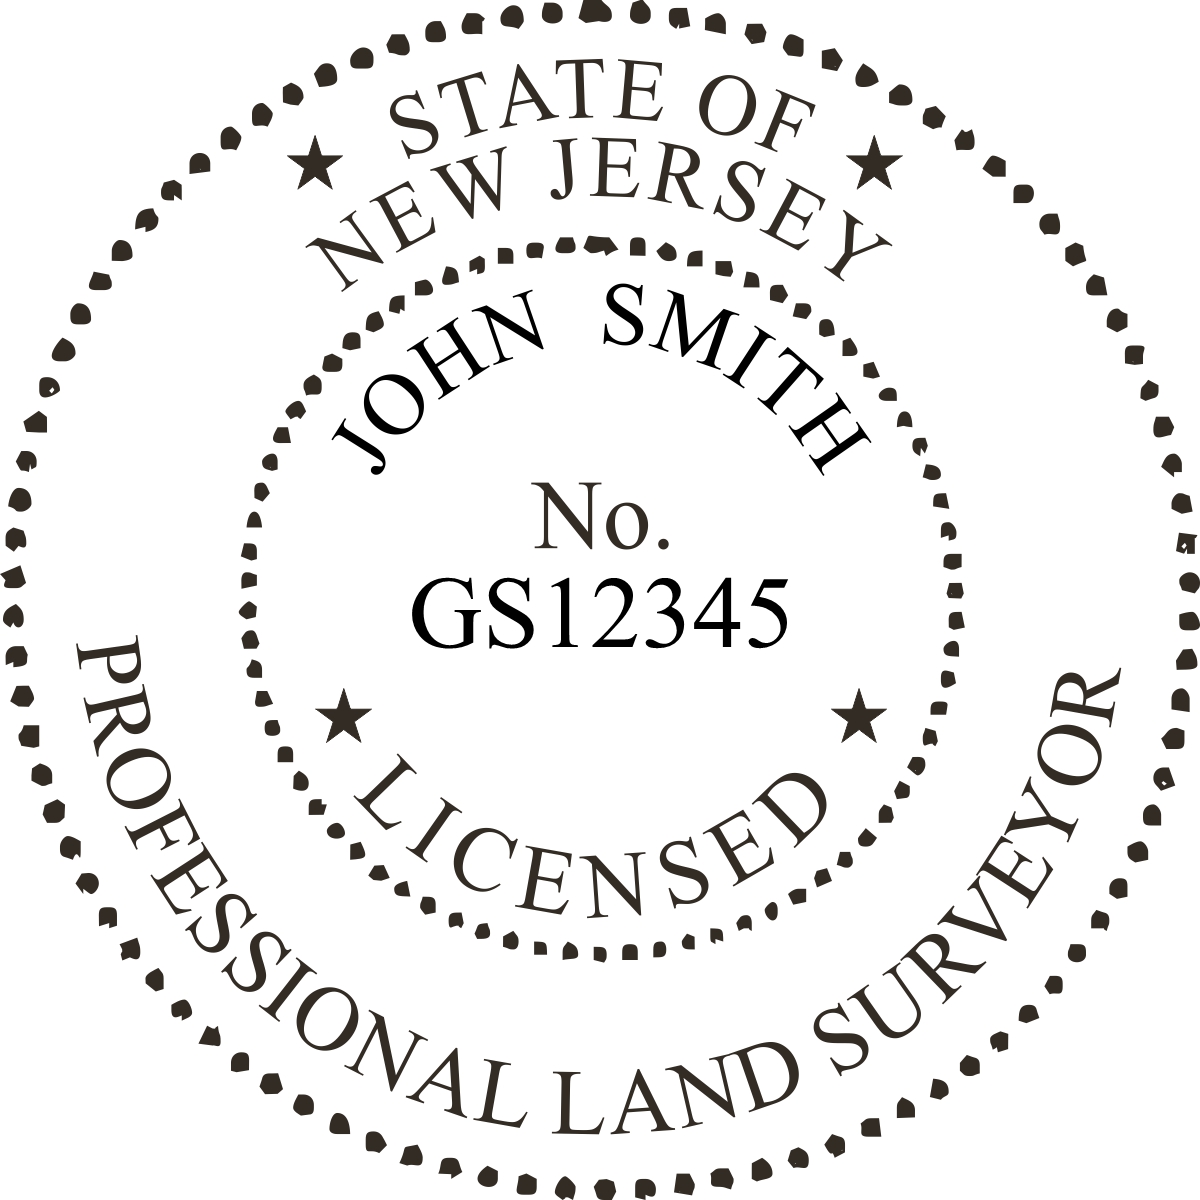 Land Surveyor Seal - Desk - New Jersey